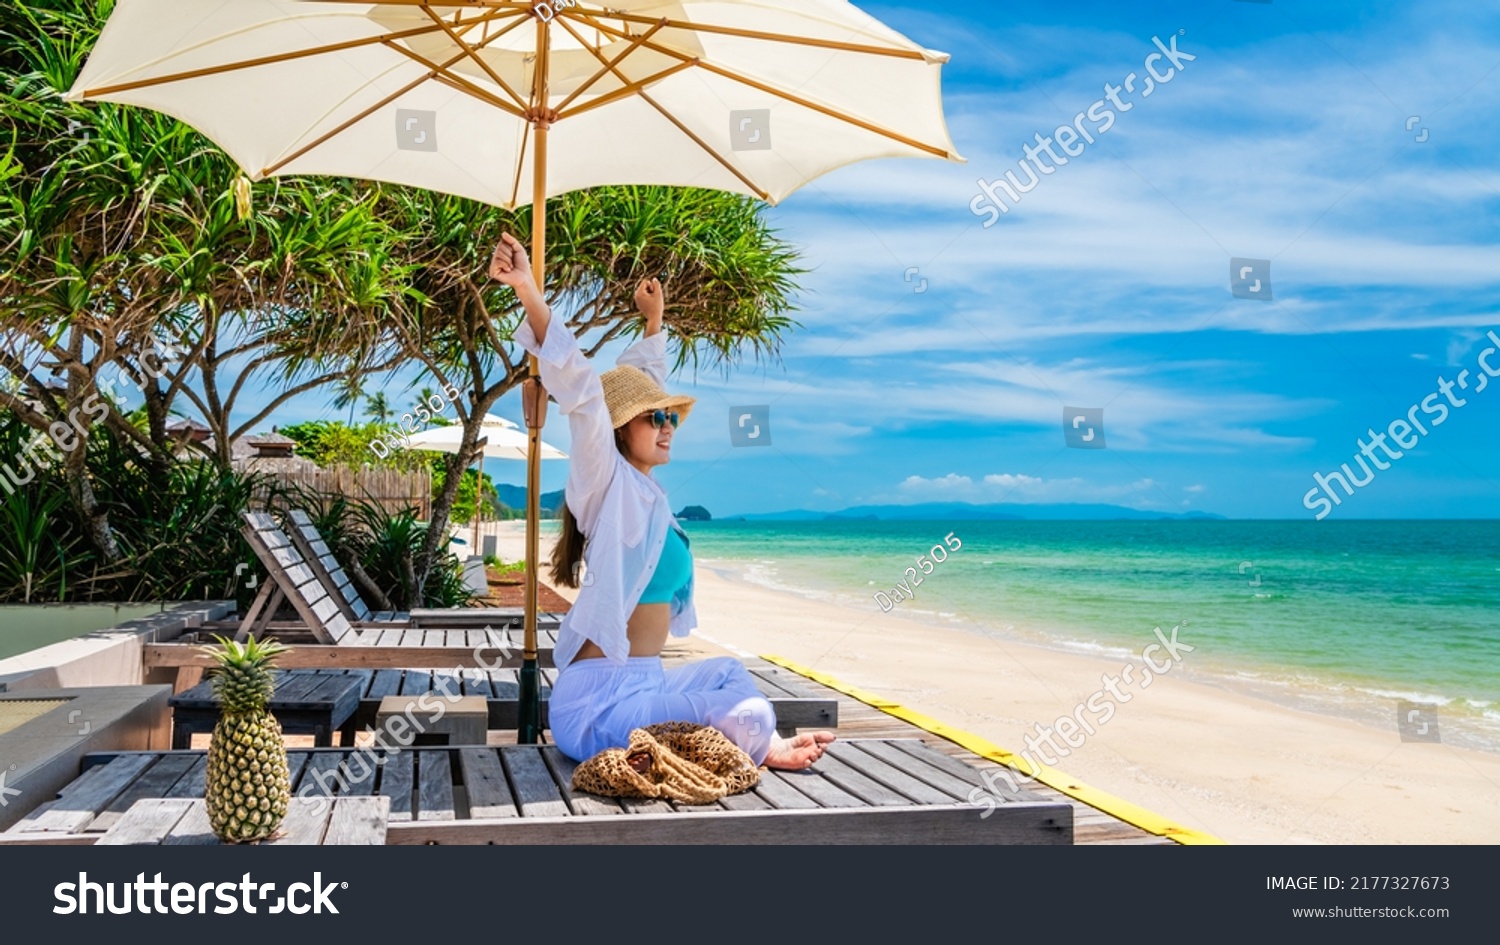 Happy traveler woman relaxing under umbrella joy fun nature view scenic landscape beach, Leisure time tourist travel Phuket Thailand summer holiday vacation, Tourism beautiful destination place Asia #2177327673